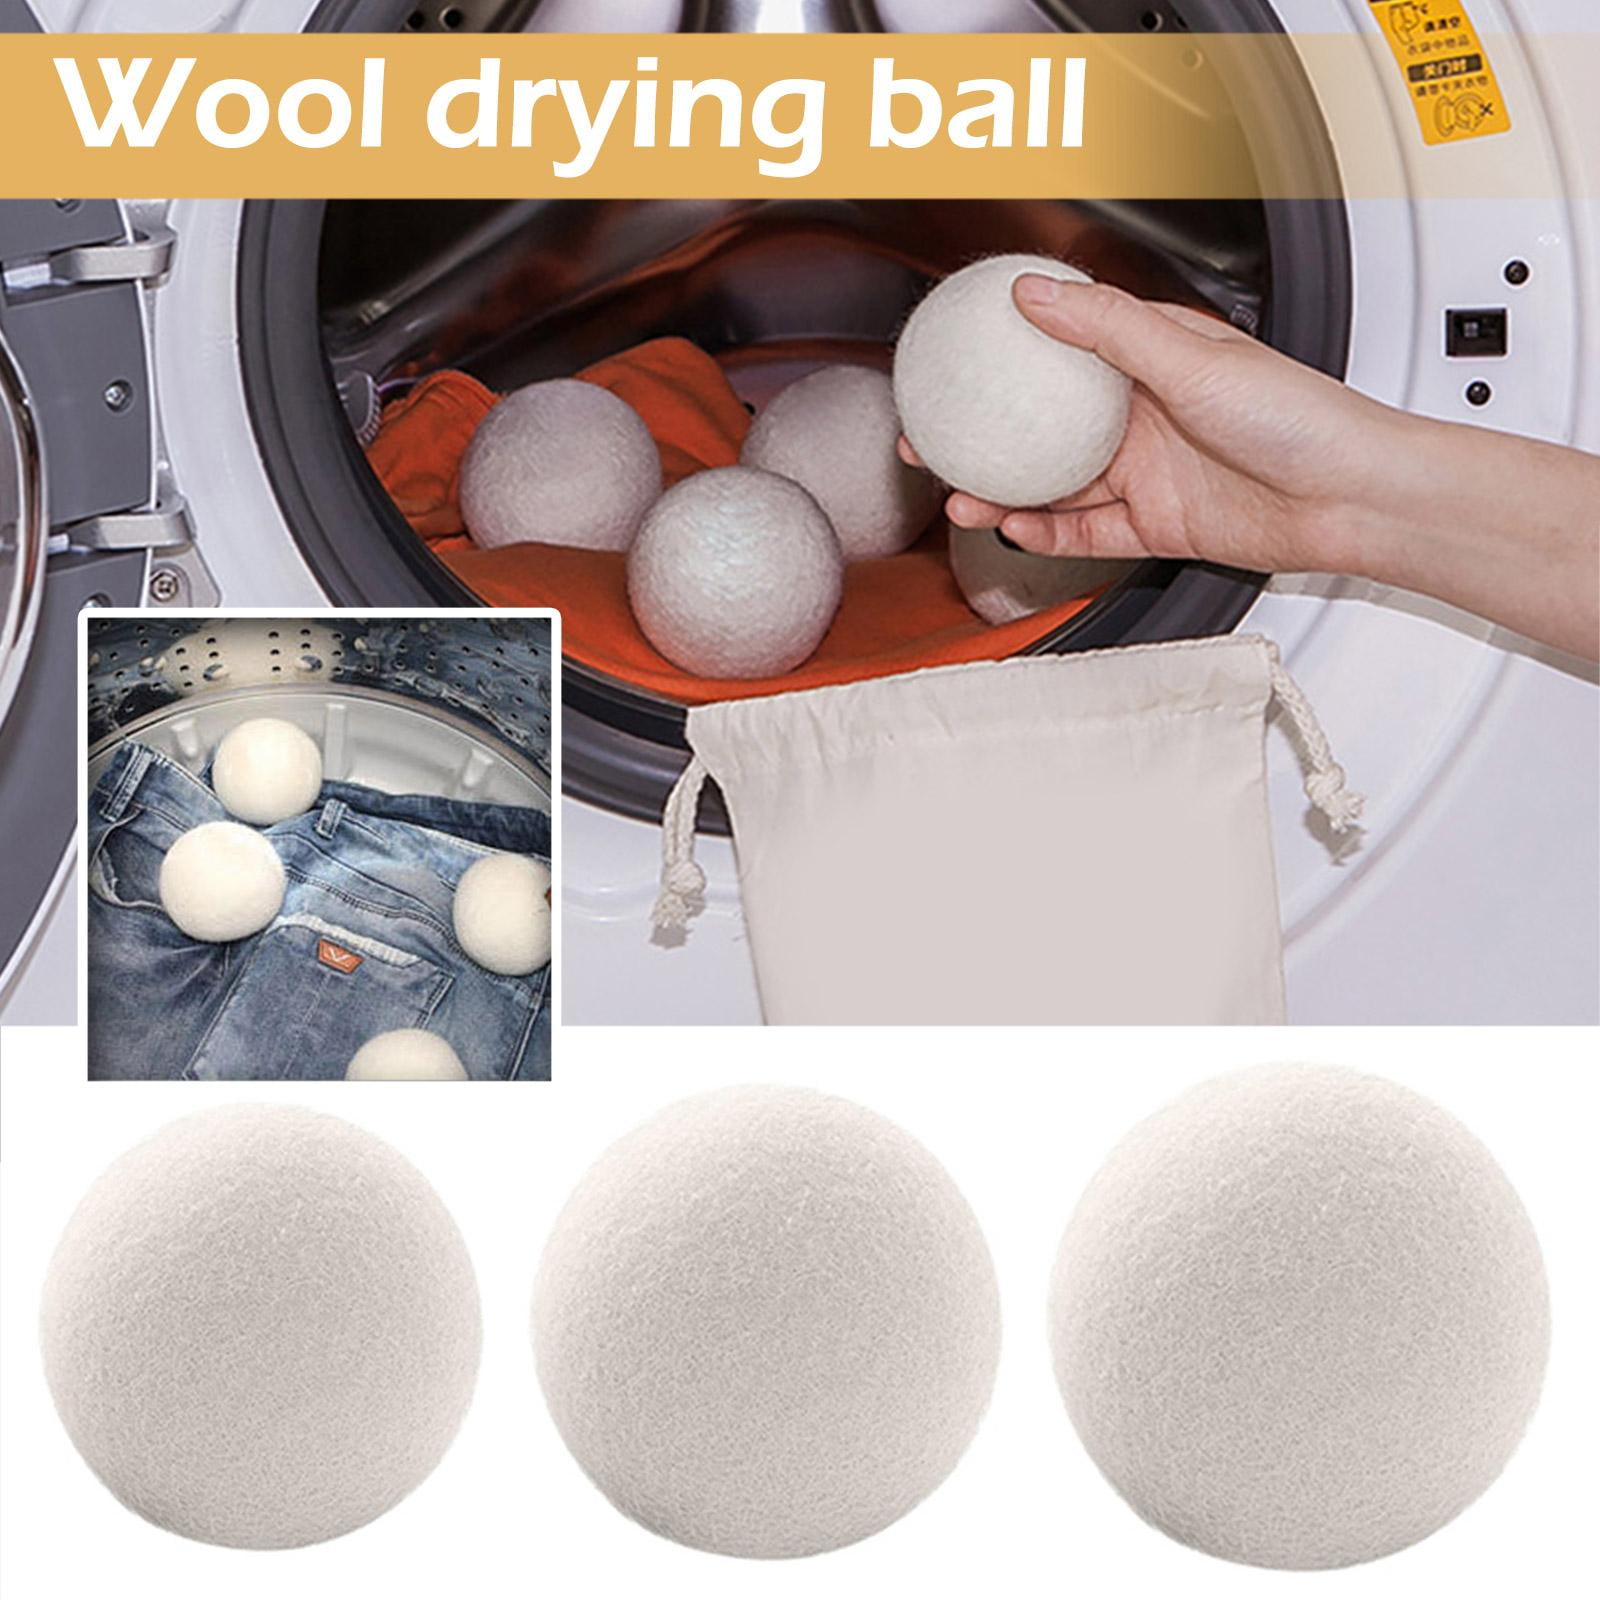 Dry balls. Tumble Dryer balls перевод. Dry ball